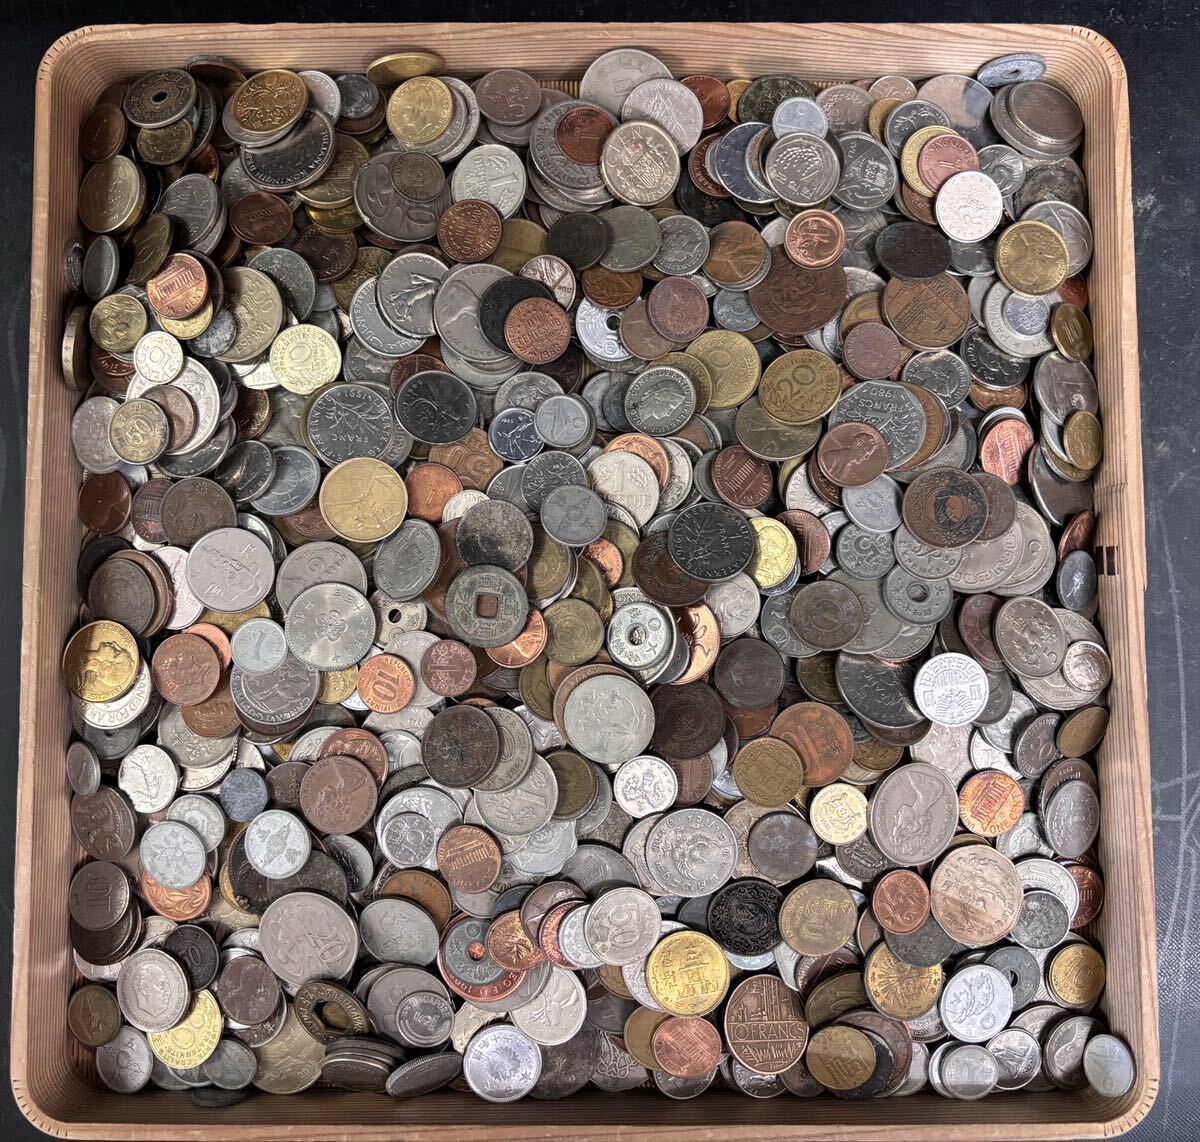 S41901 古美術 古銭 硬貨 貨幣 硬幣 外国銭 世界コイン 大量まとめ 約5.06kg アンティークの画像1